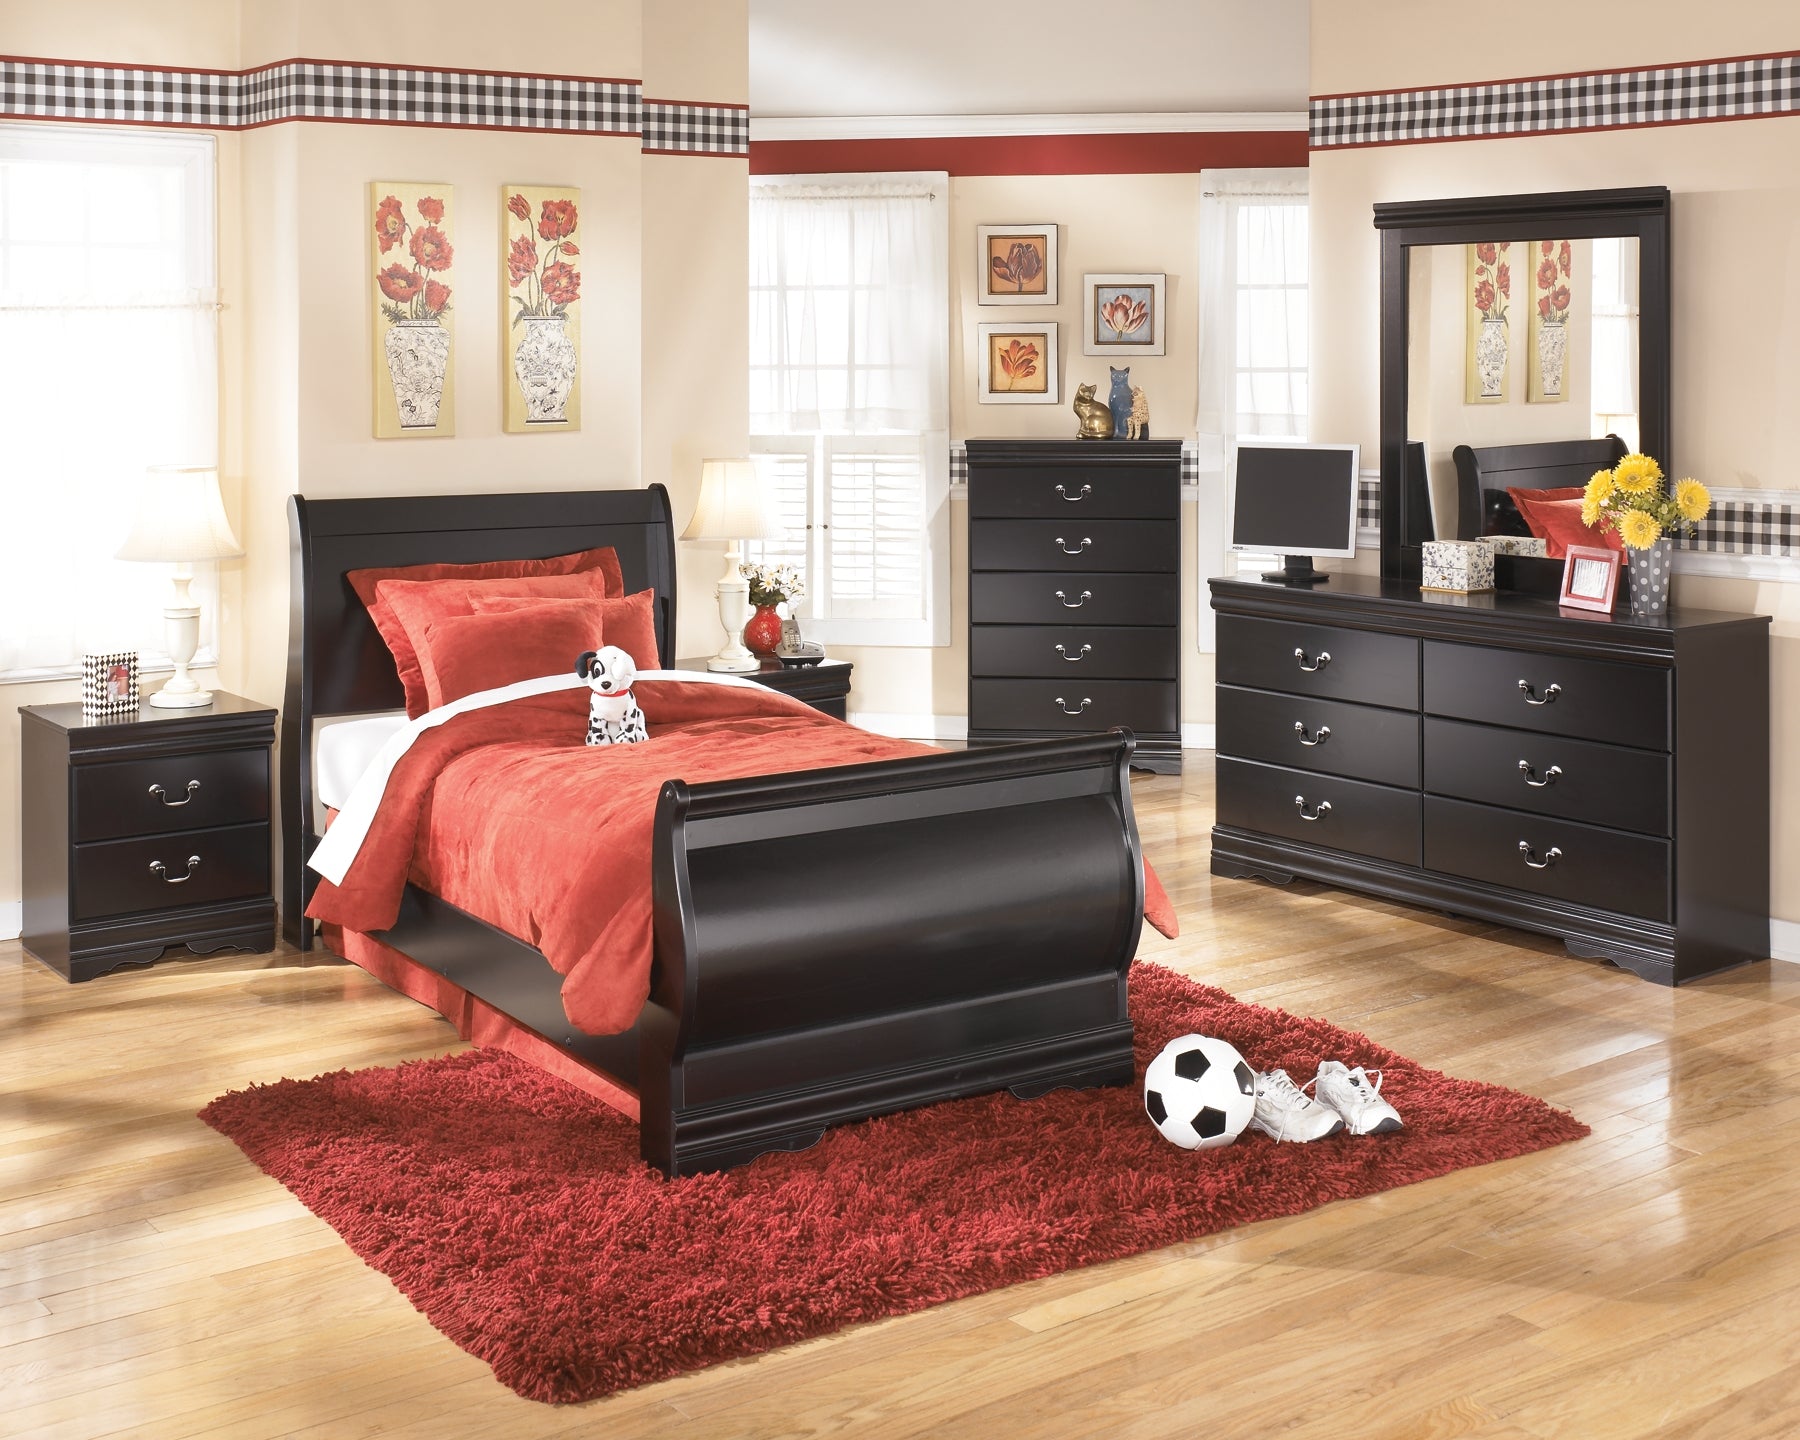 Huey Vineyard Full Sleigh Bed with Mirrored Dresser, Chest and Nightstand Wilson Furniture (OH)  in Bridgeport, Ohio. Serving Bridgeport, Yorkville, Bellaire, & Avondale